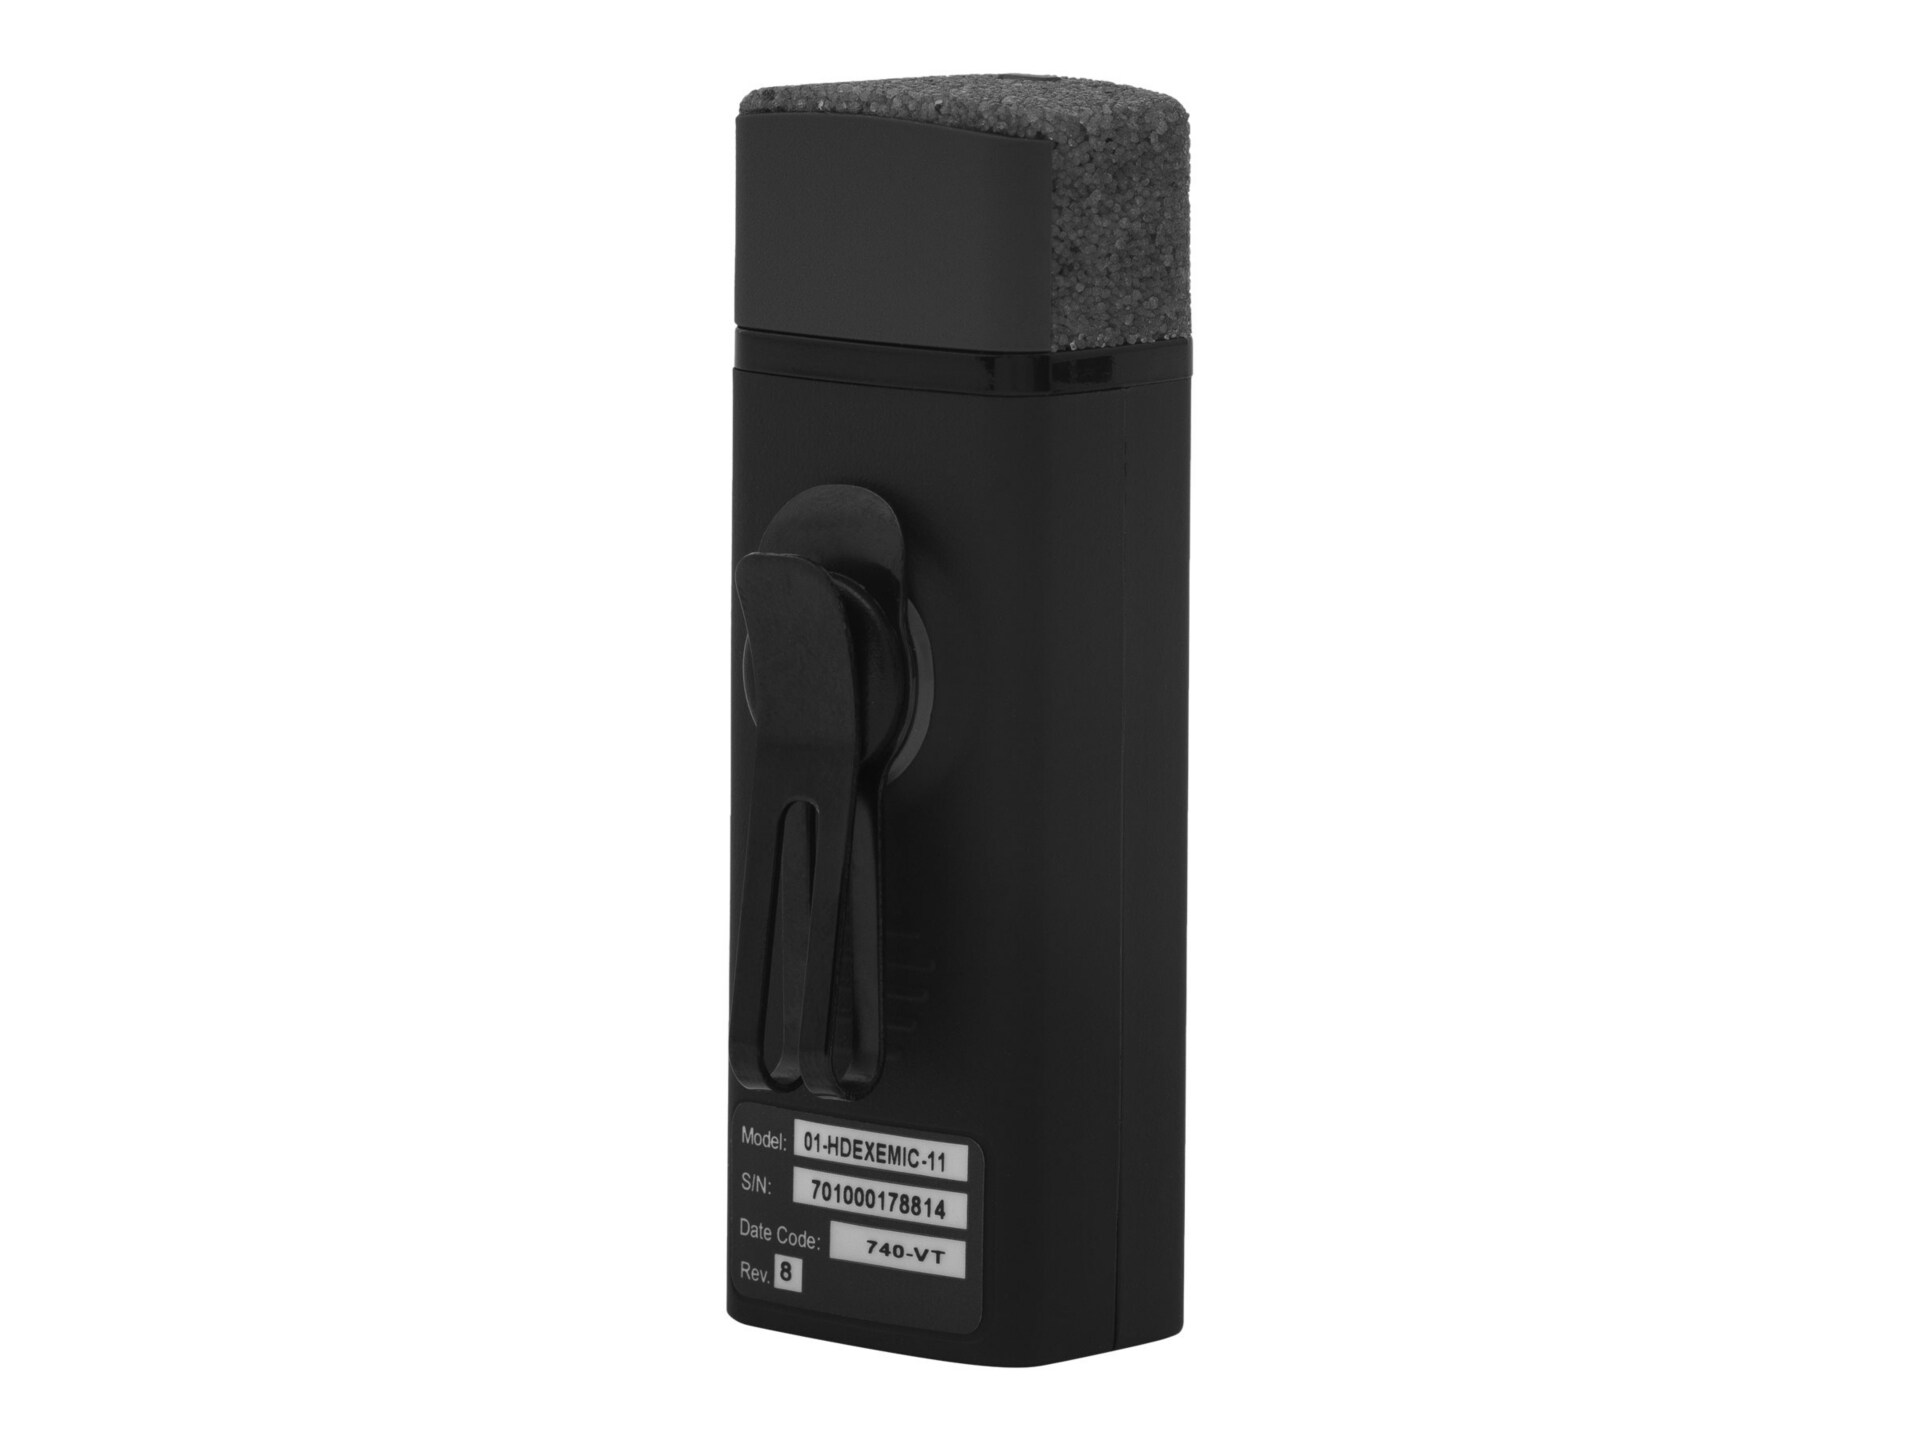 Revolabs HD Wearable - wireless microphone